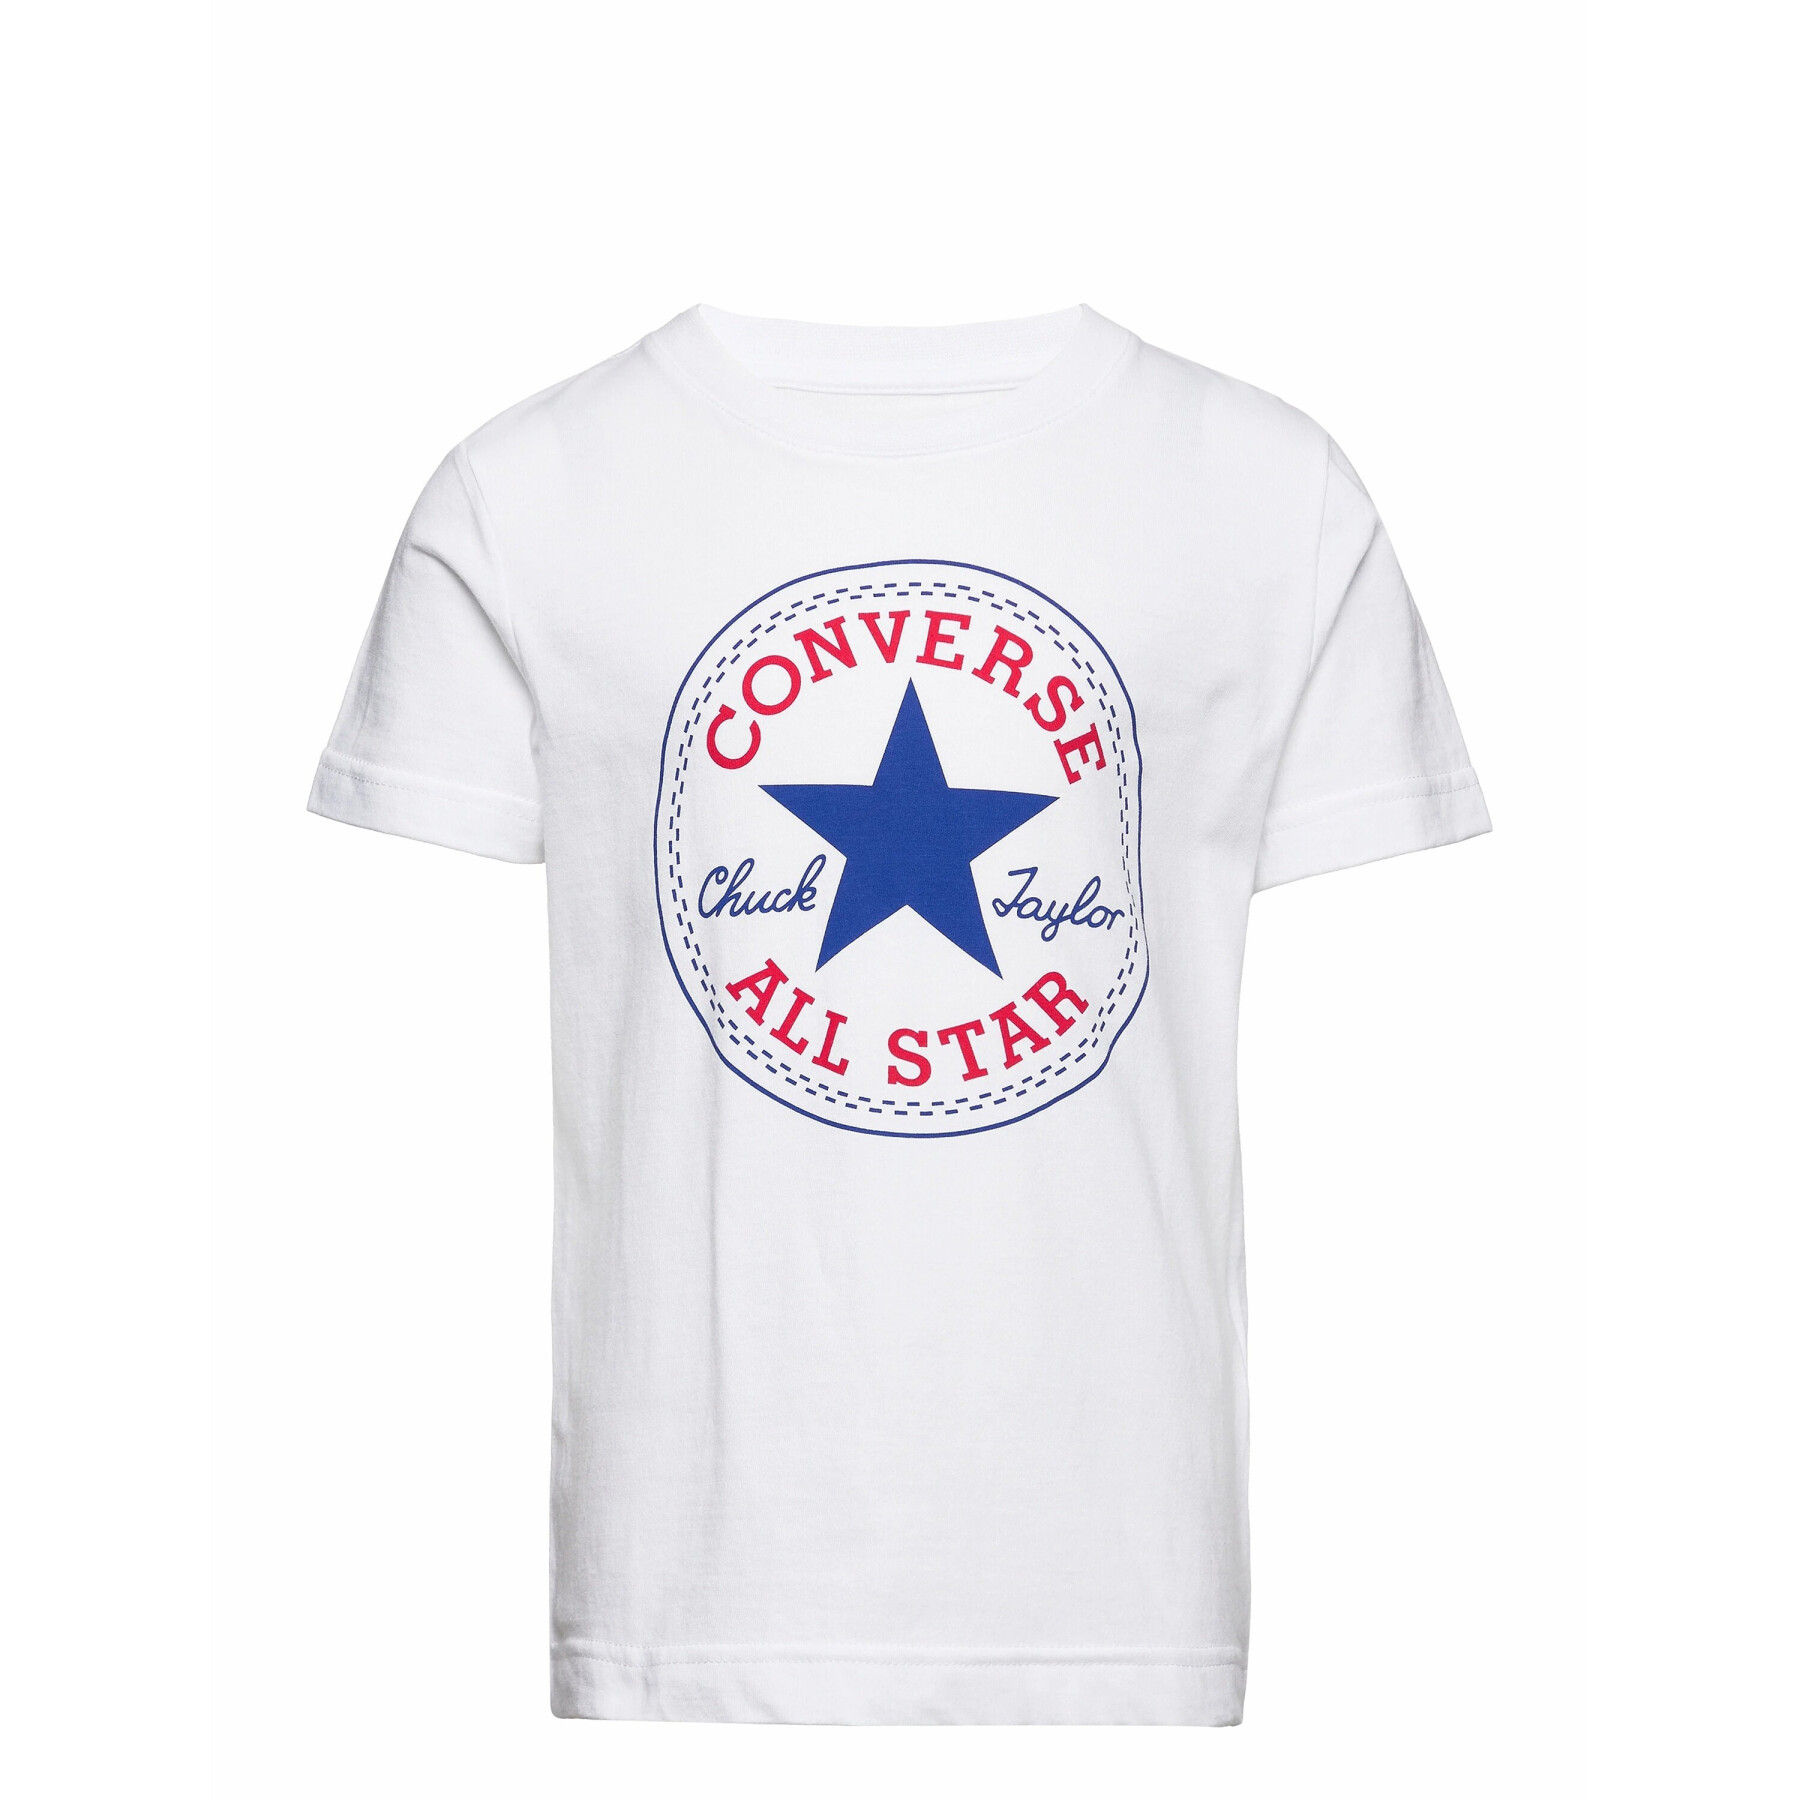 T-shirt per bambini Converse Chuck Patch